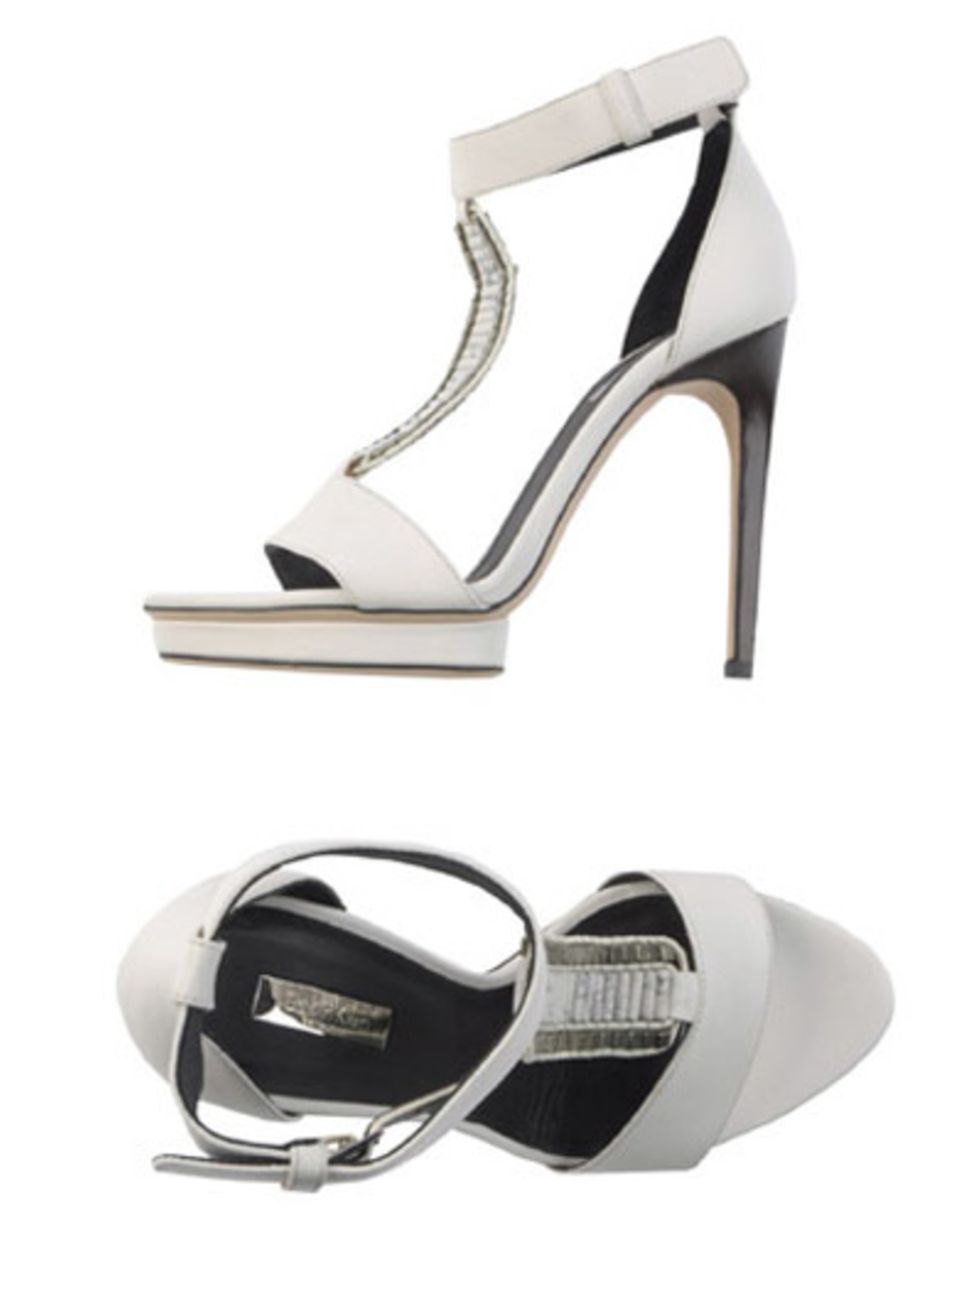 Footwear, Product, High heels, White, Fashion, Black, Grey, Sandal, Basic pump, Beige, 